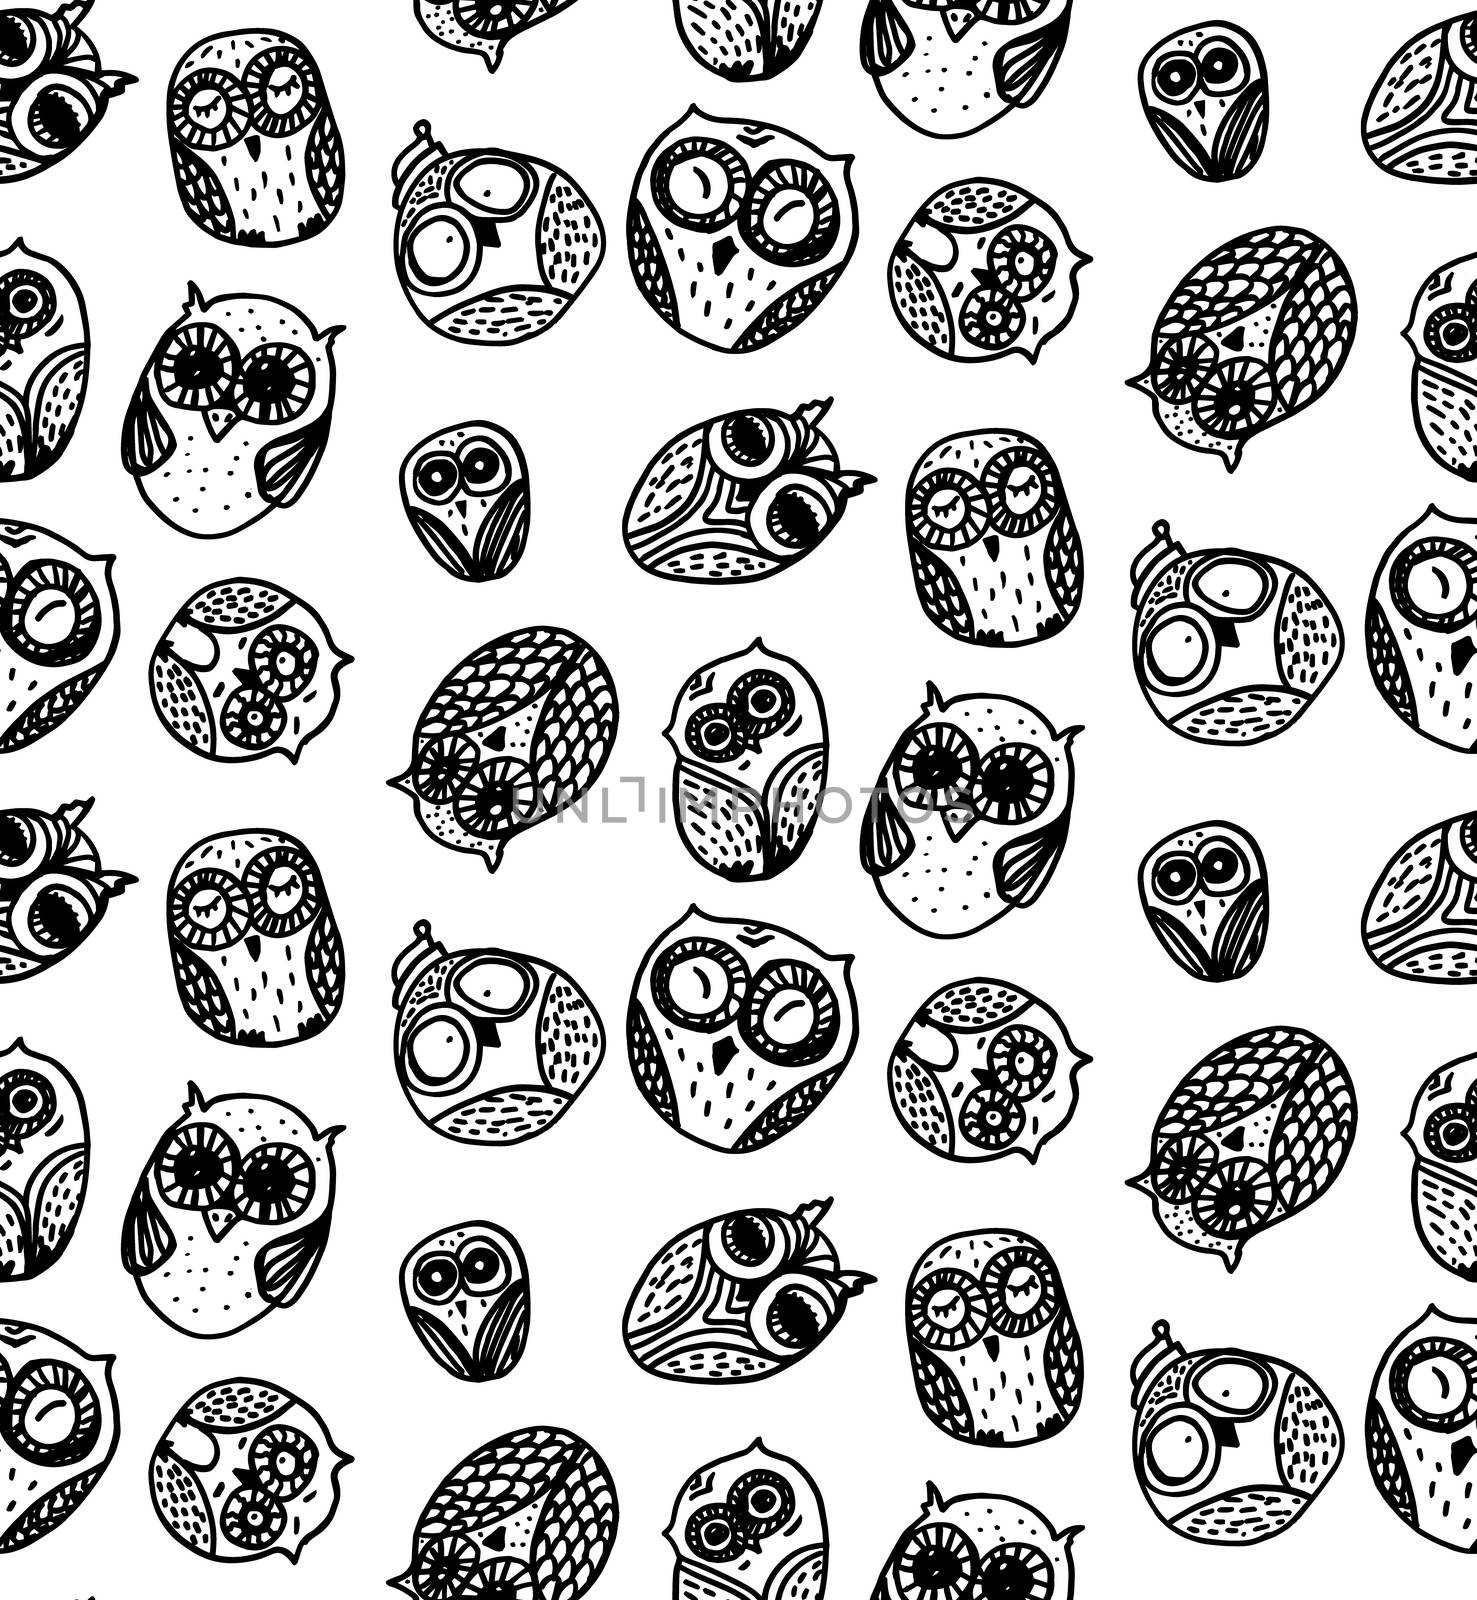 Owls hand drawn seamless pattern by barsrsind